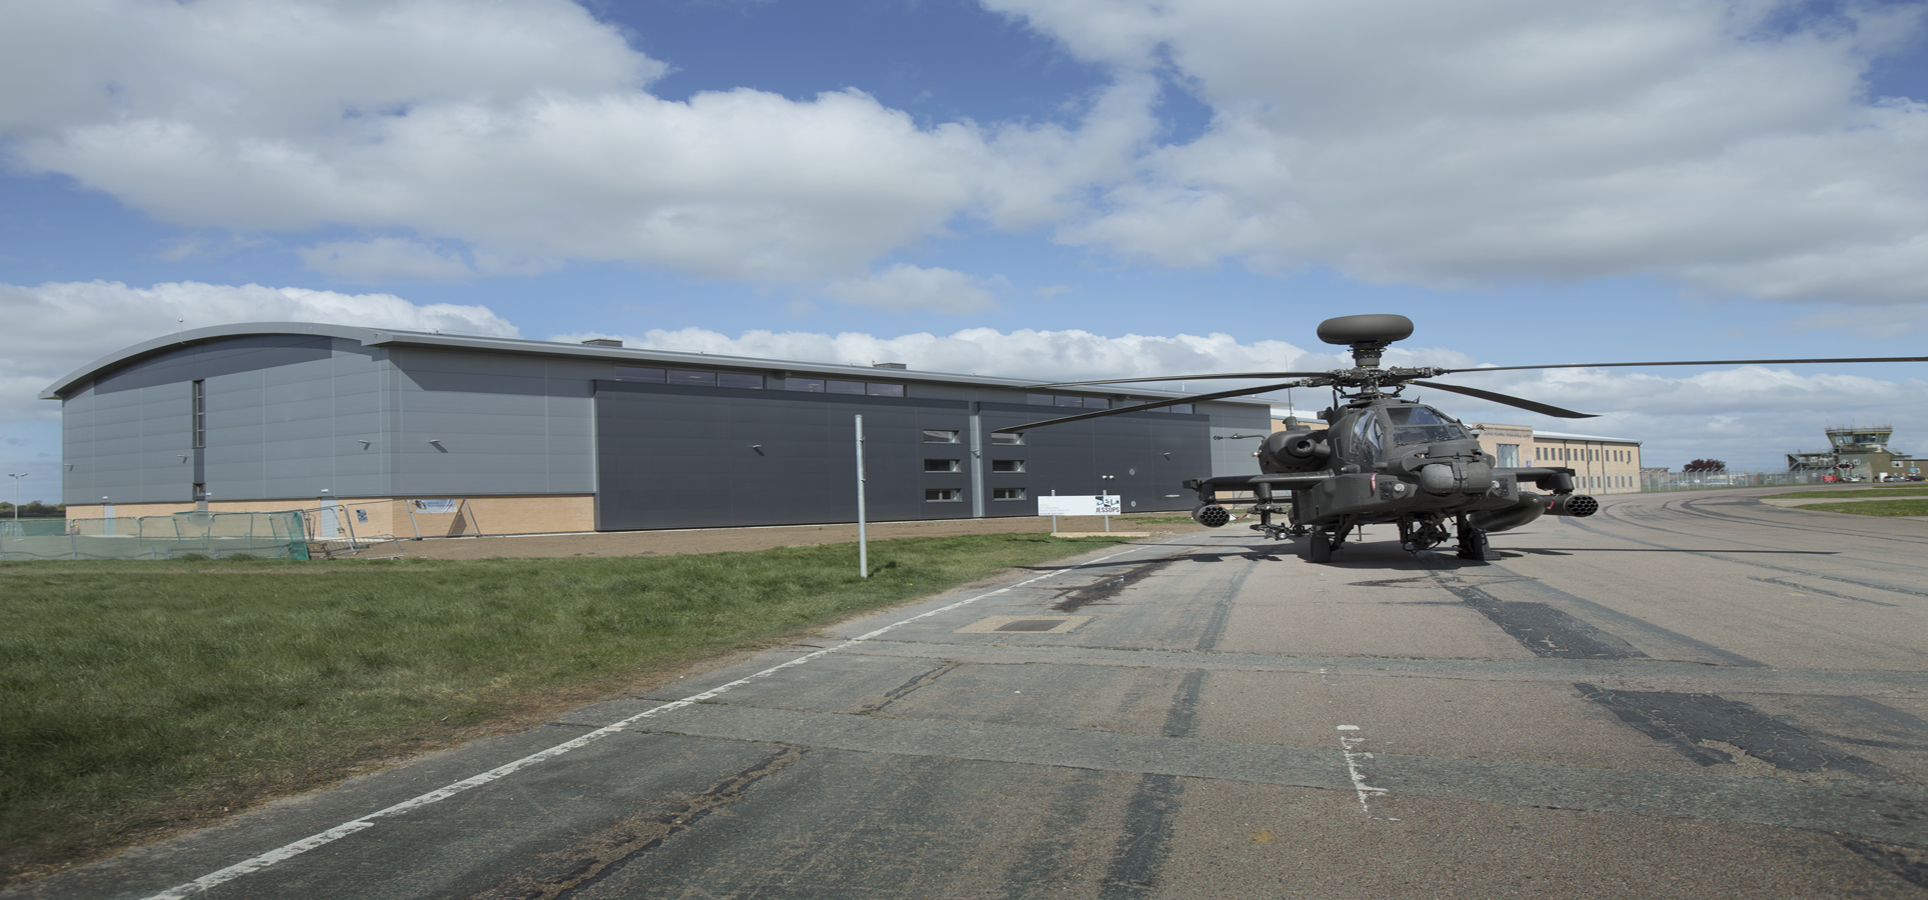 High-flying Jessops completes in Suffolk, Jessops Construction Ltd